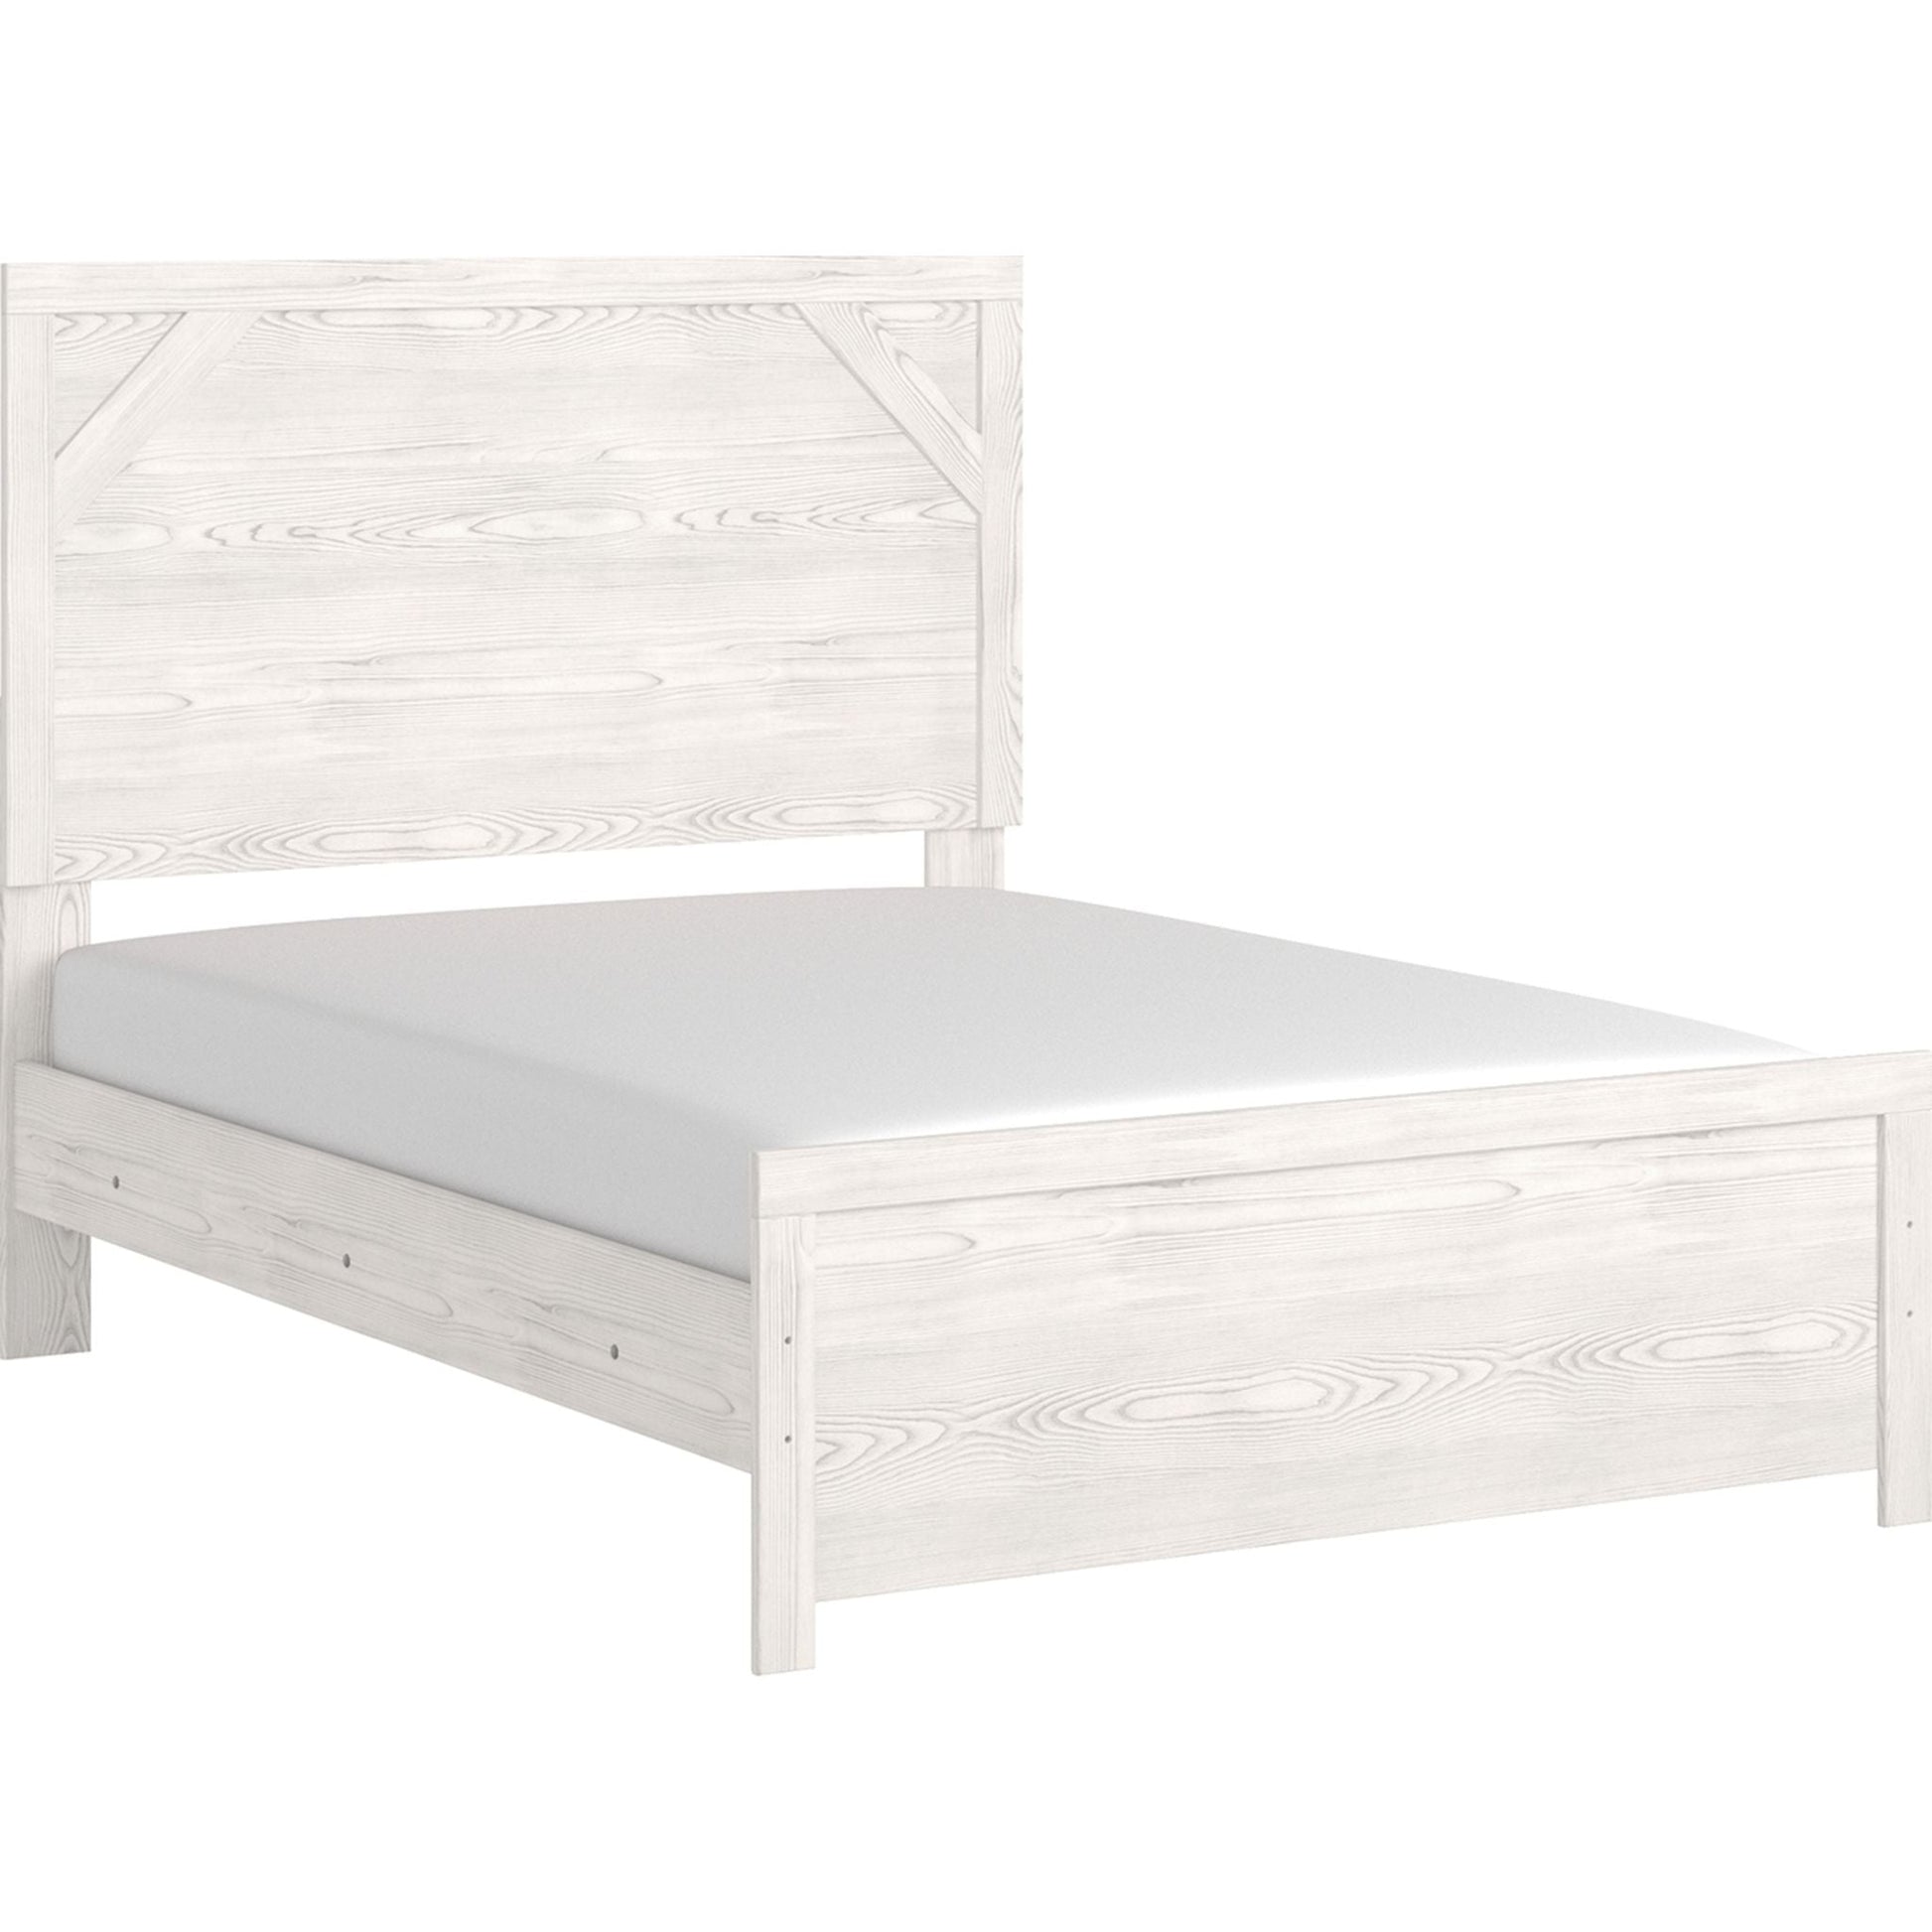 Gerridan 3 Piece Full Bed - White/Gray